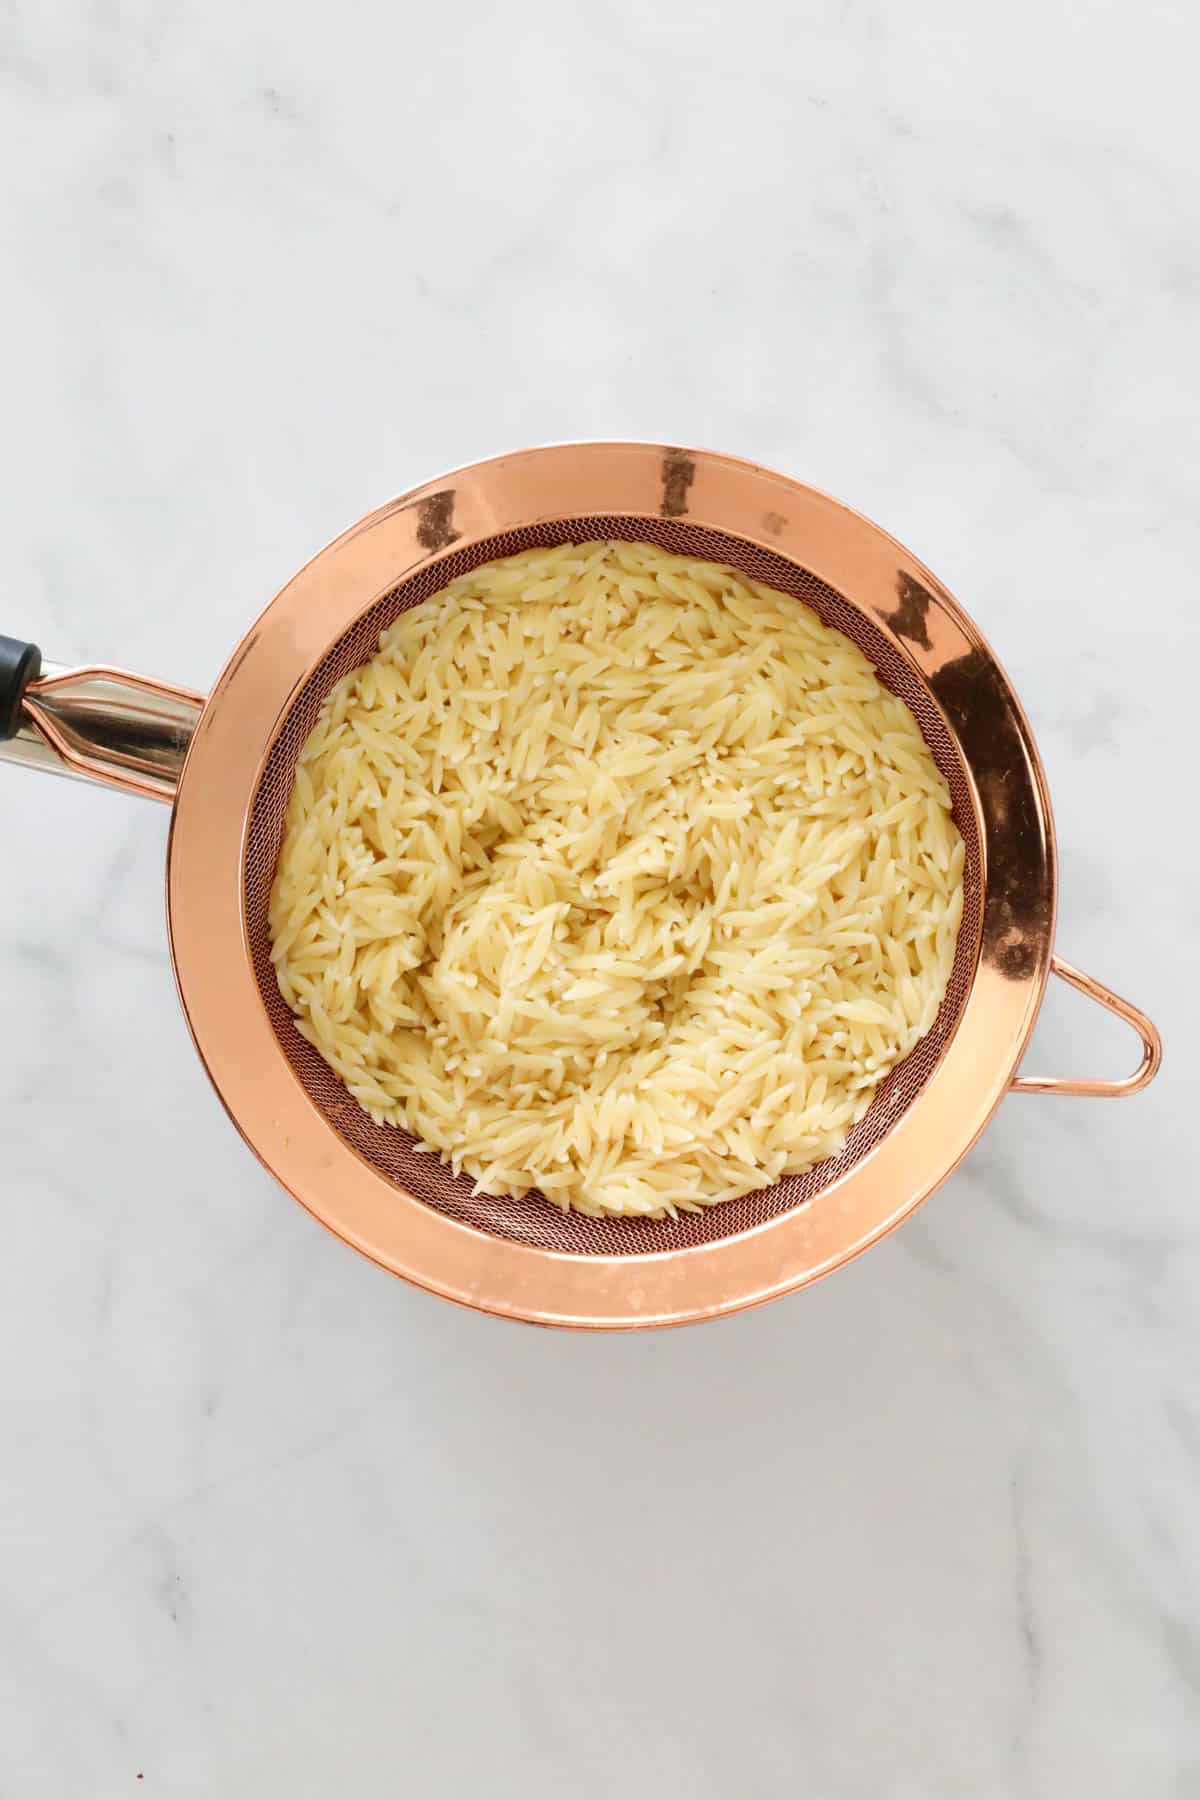 Cooked risoni pasta in a copper sieve.